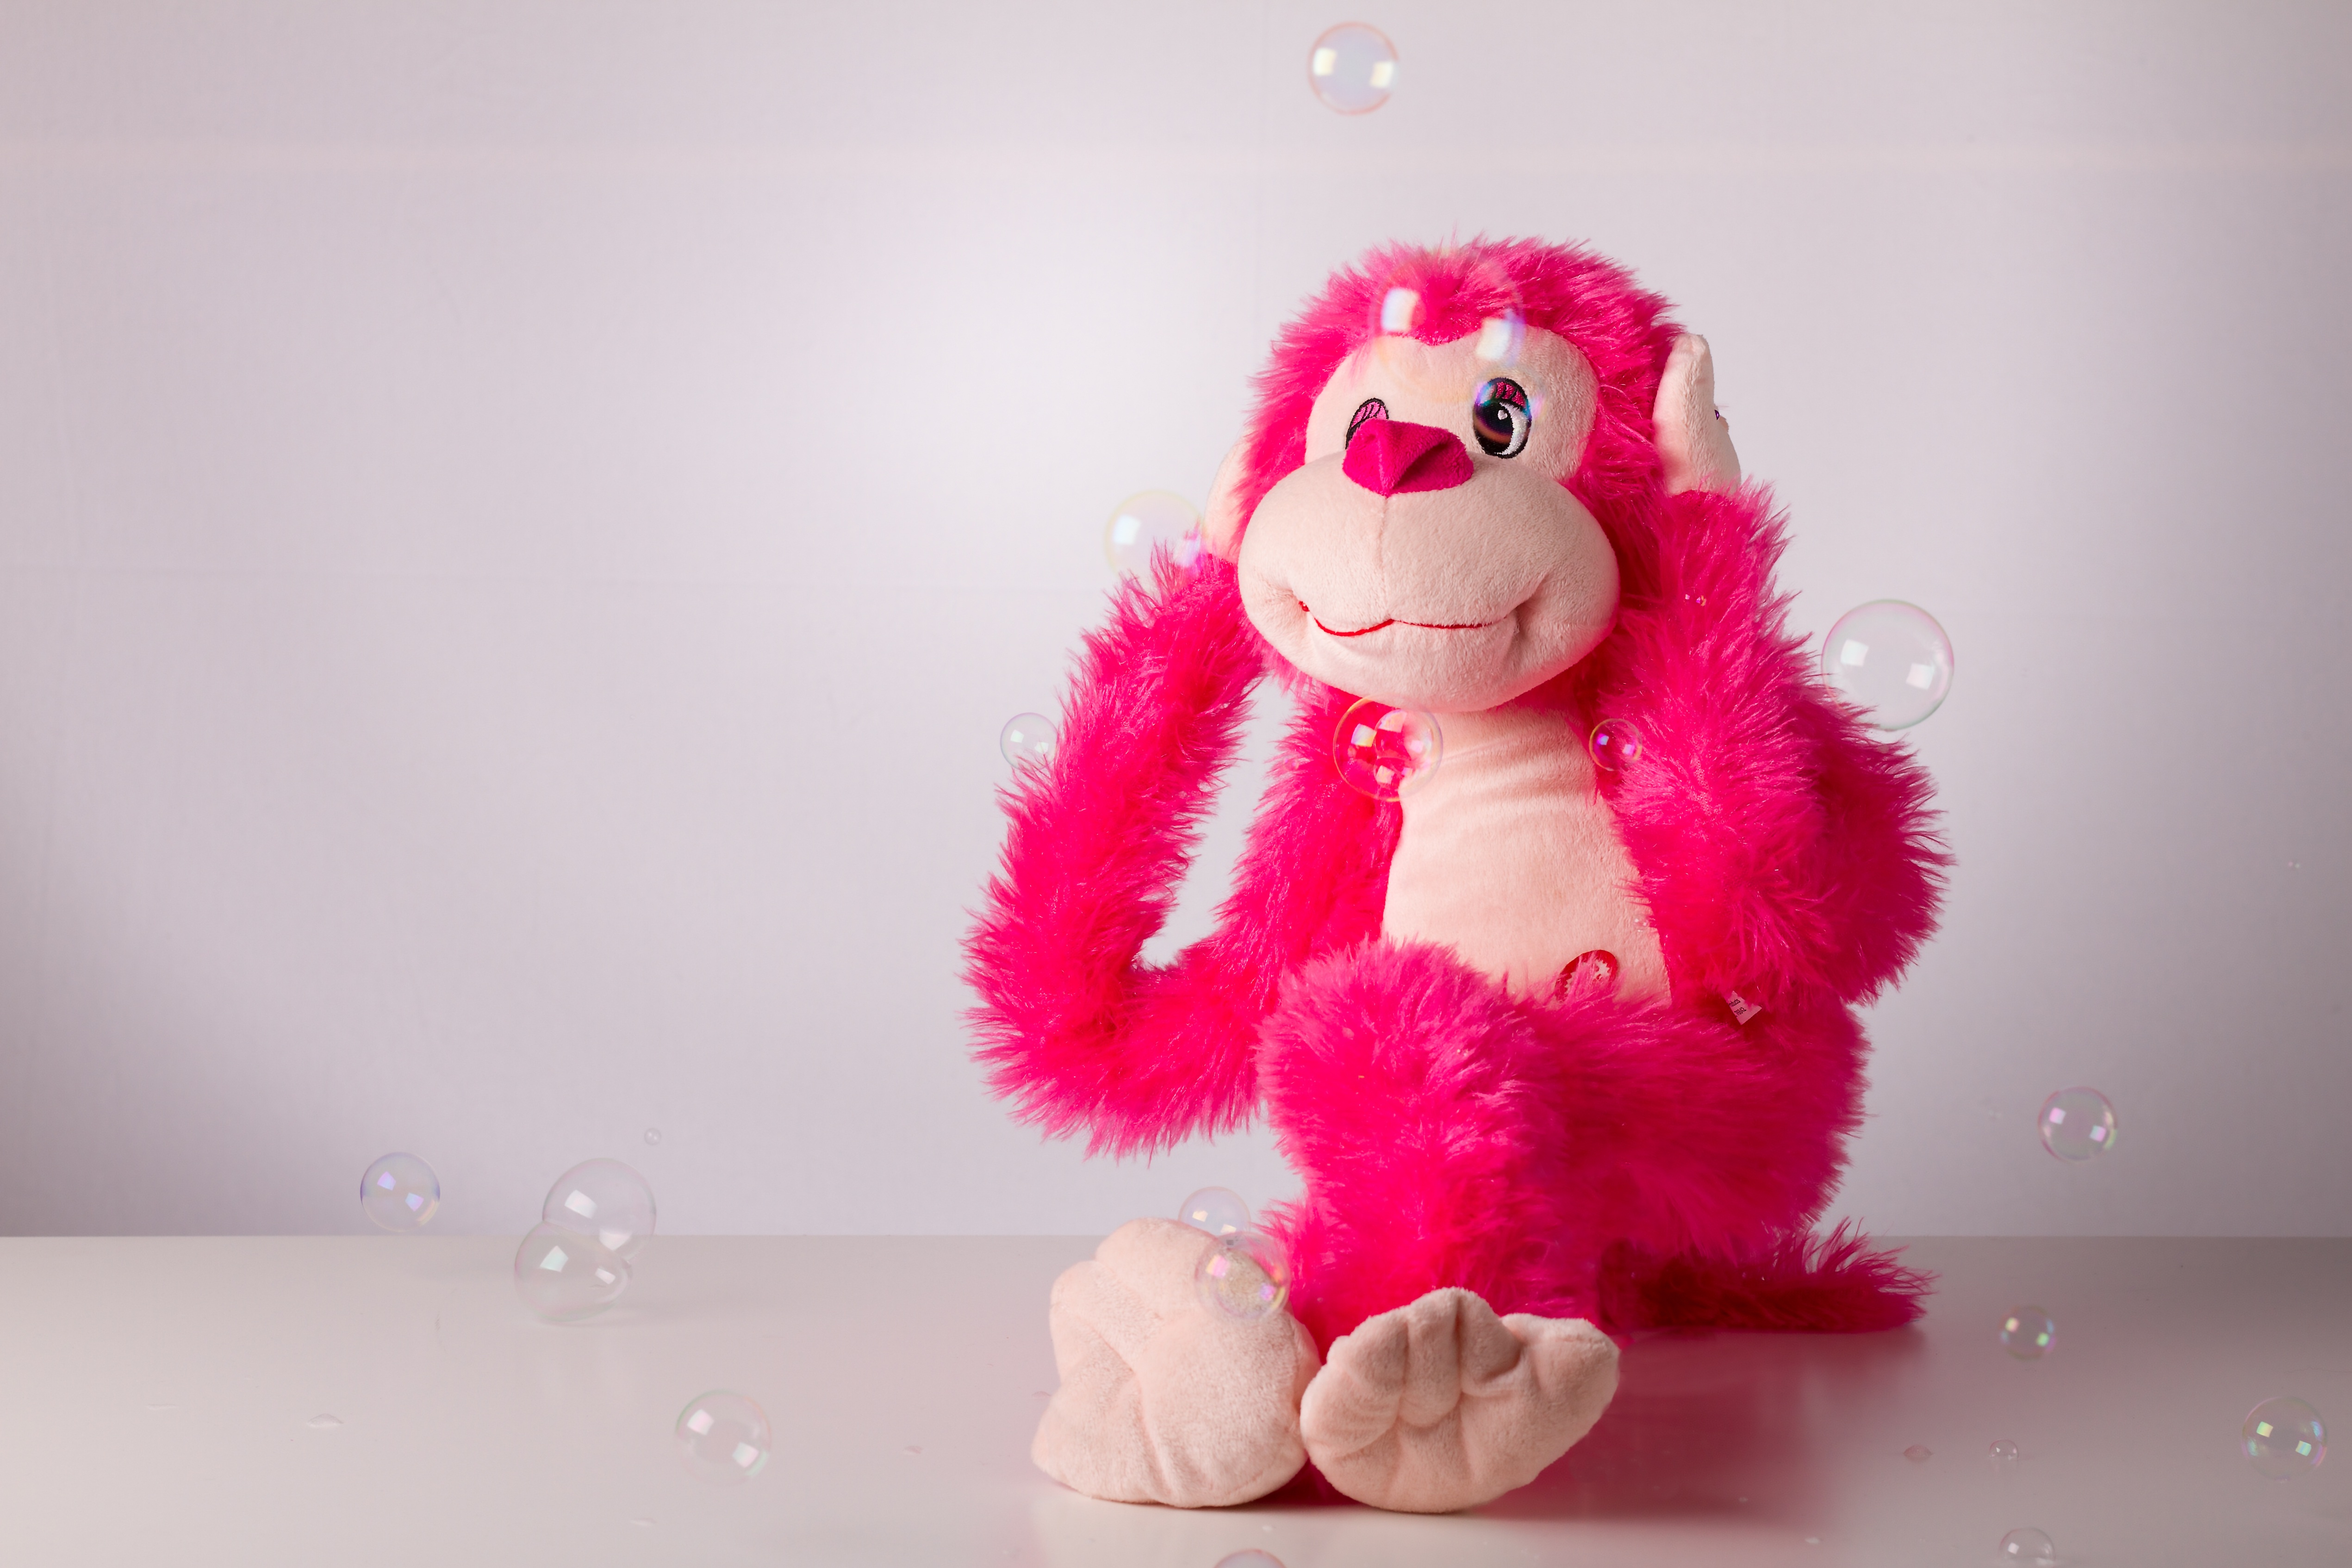 Hear No Evil, Pink stuffed Animal by Christine Sponchia